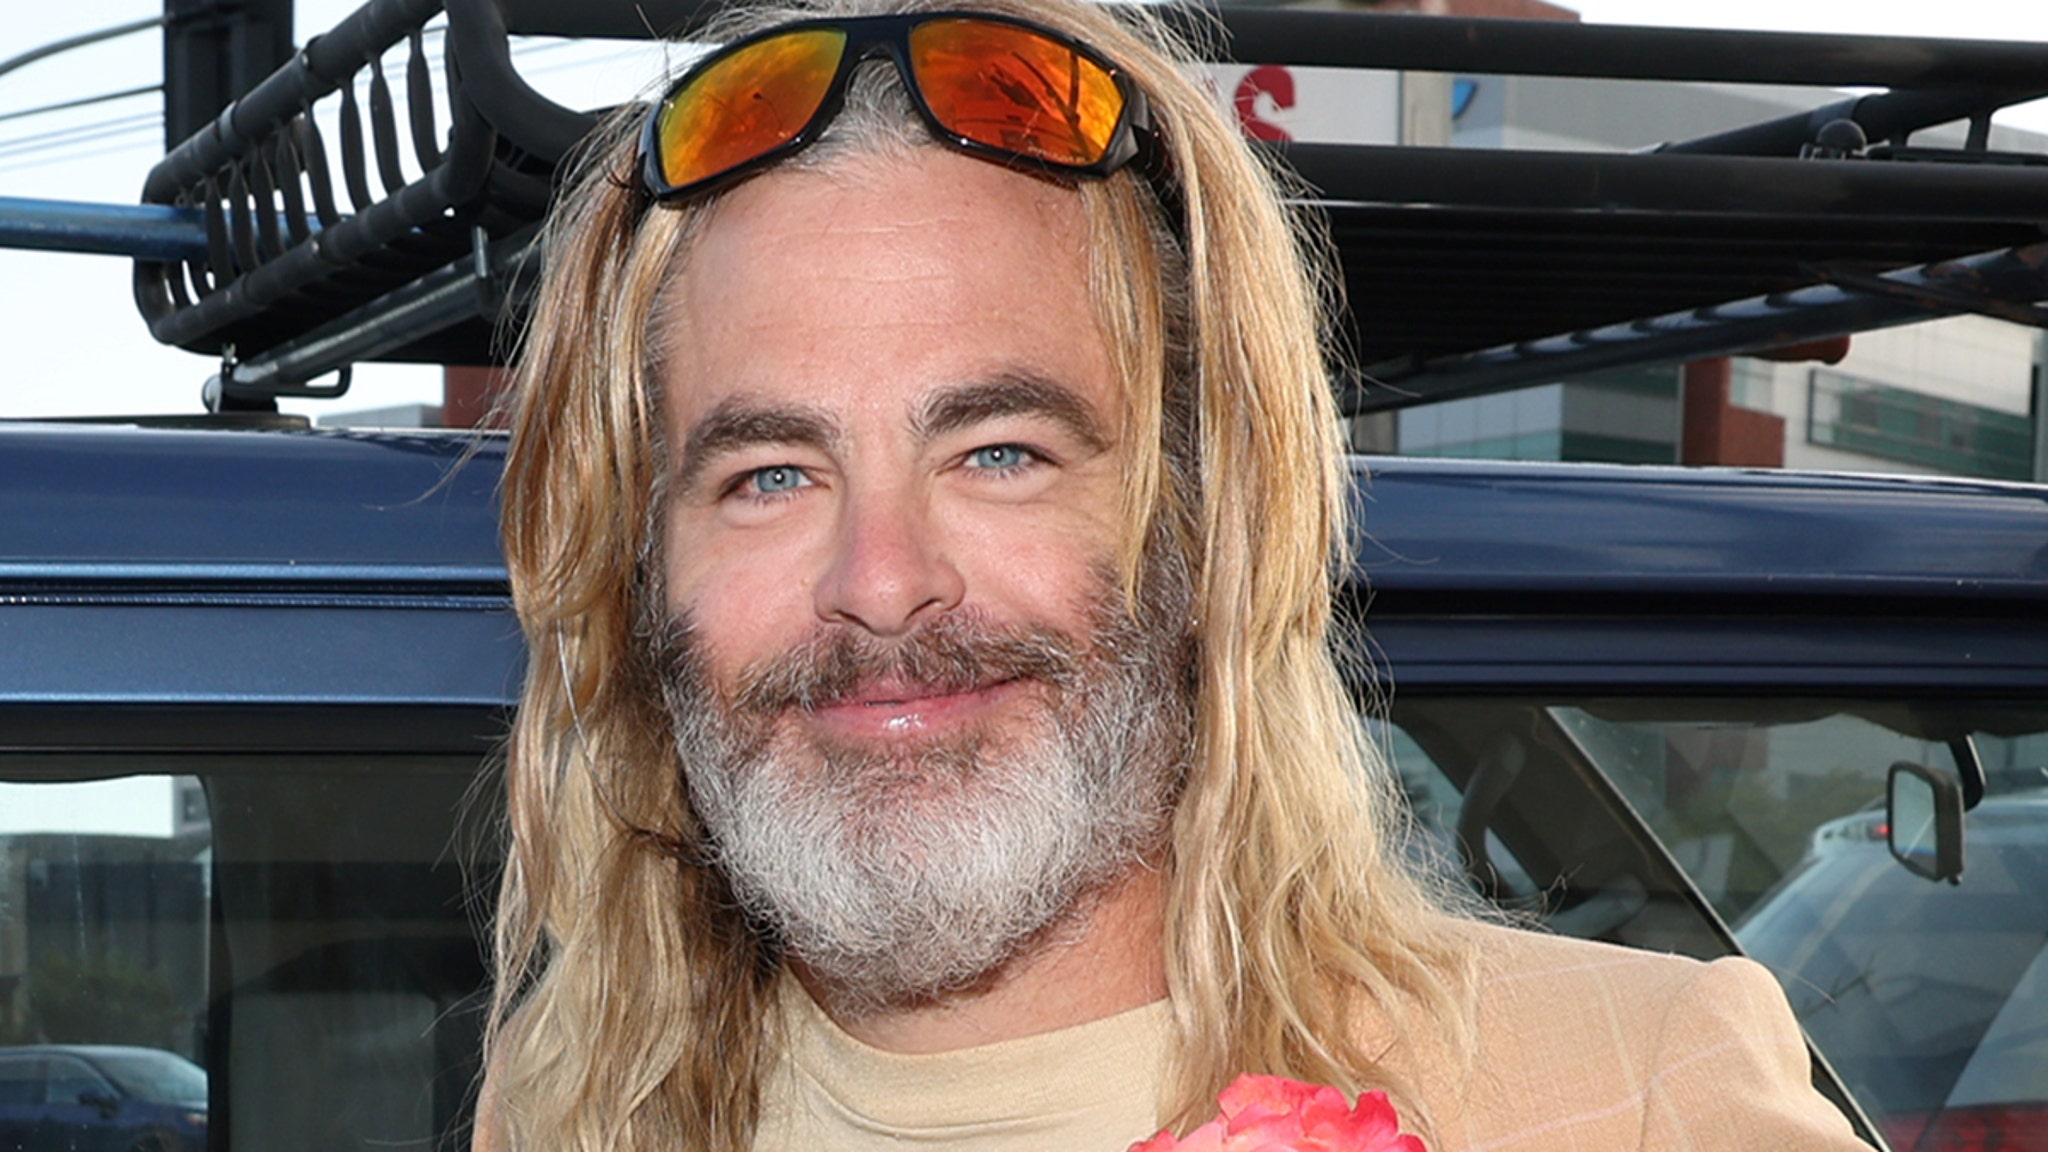 Chris Pine plays 'Poolman' character in Jorts, long blond hair